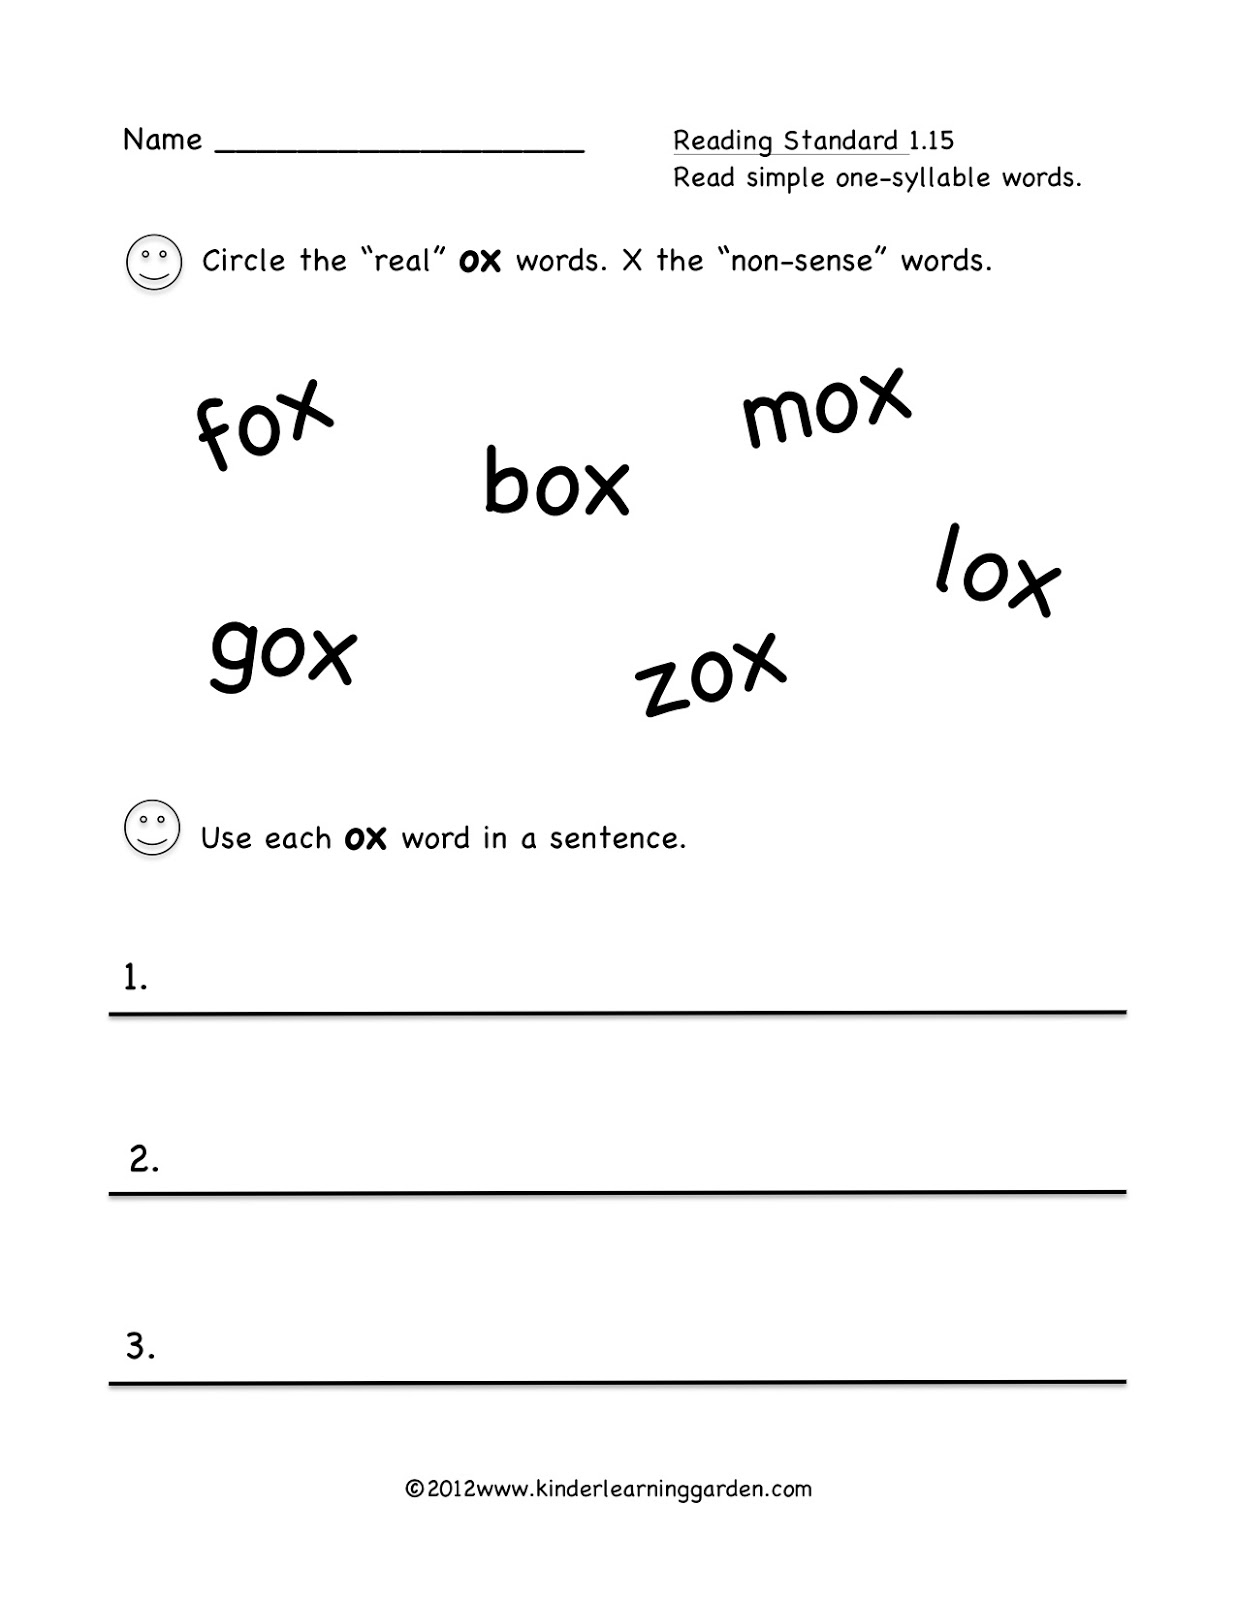 Kinder Learning Garden: ox & ix Word Family Freebies